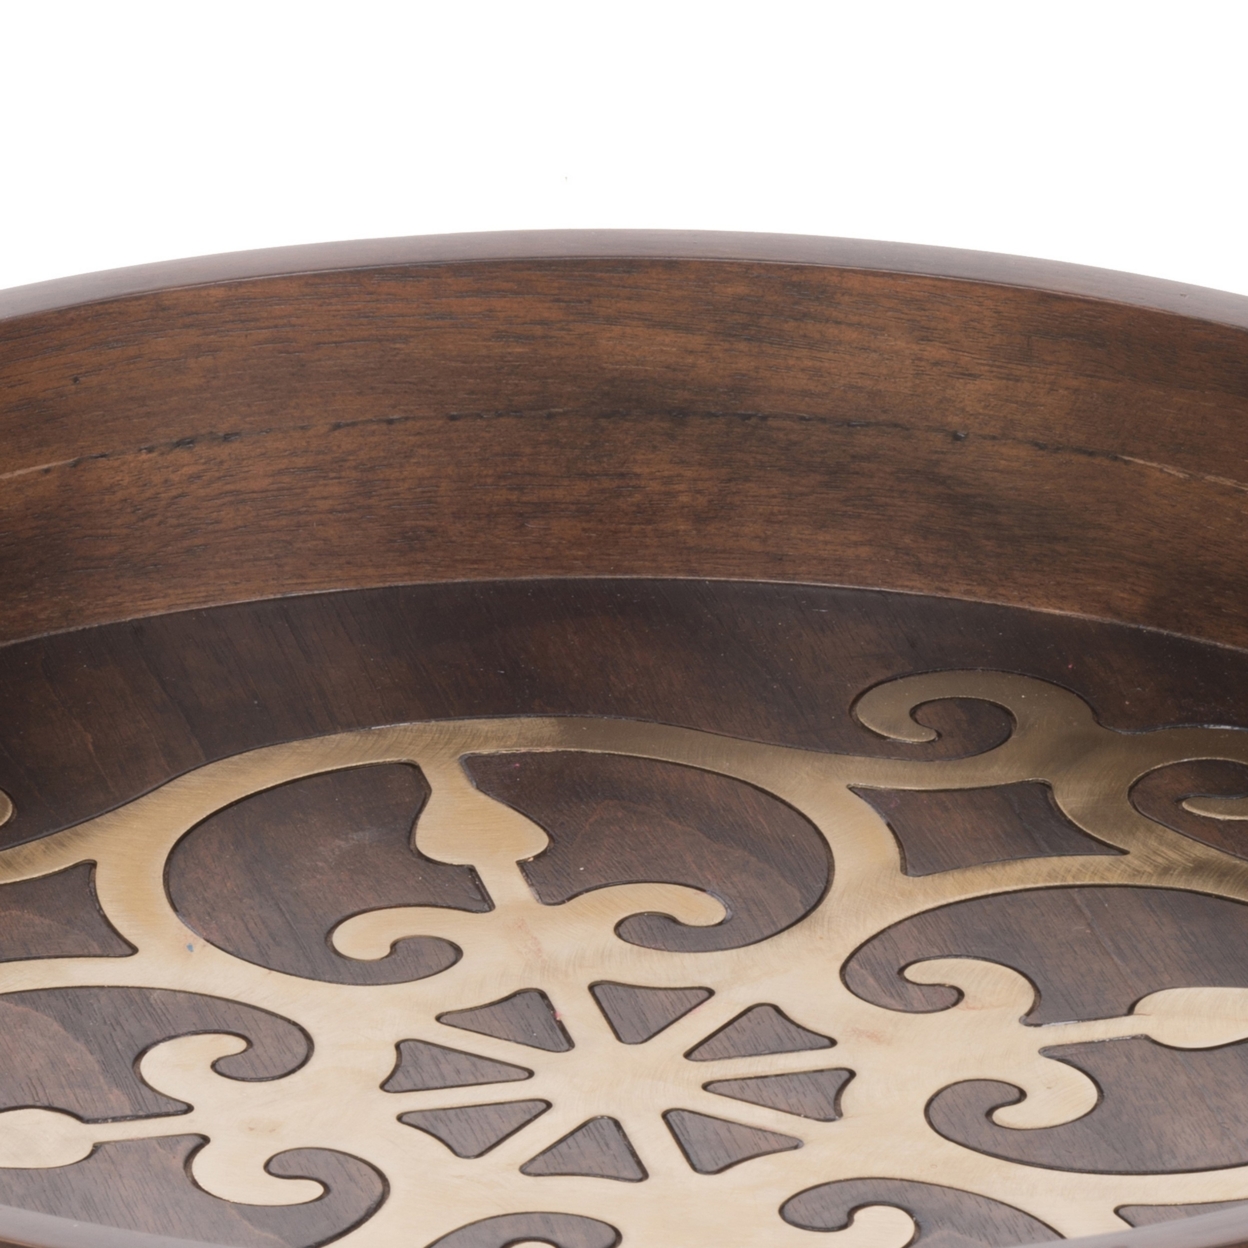 18 Inch Round Decorative Tray, Brass Inlaid Design And Brown Wood Frame- Saltoro Sherpi